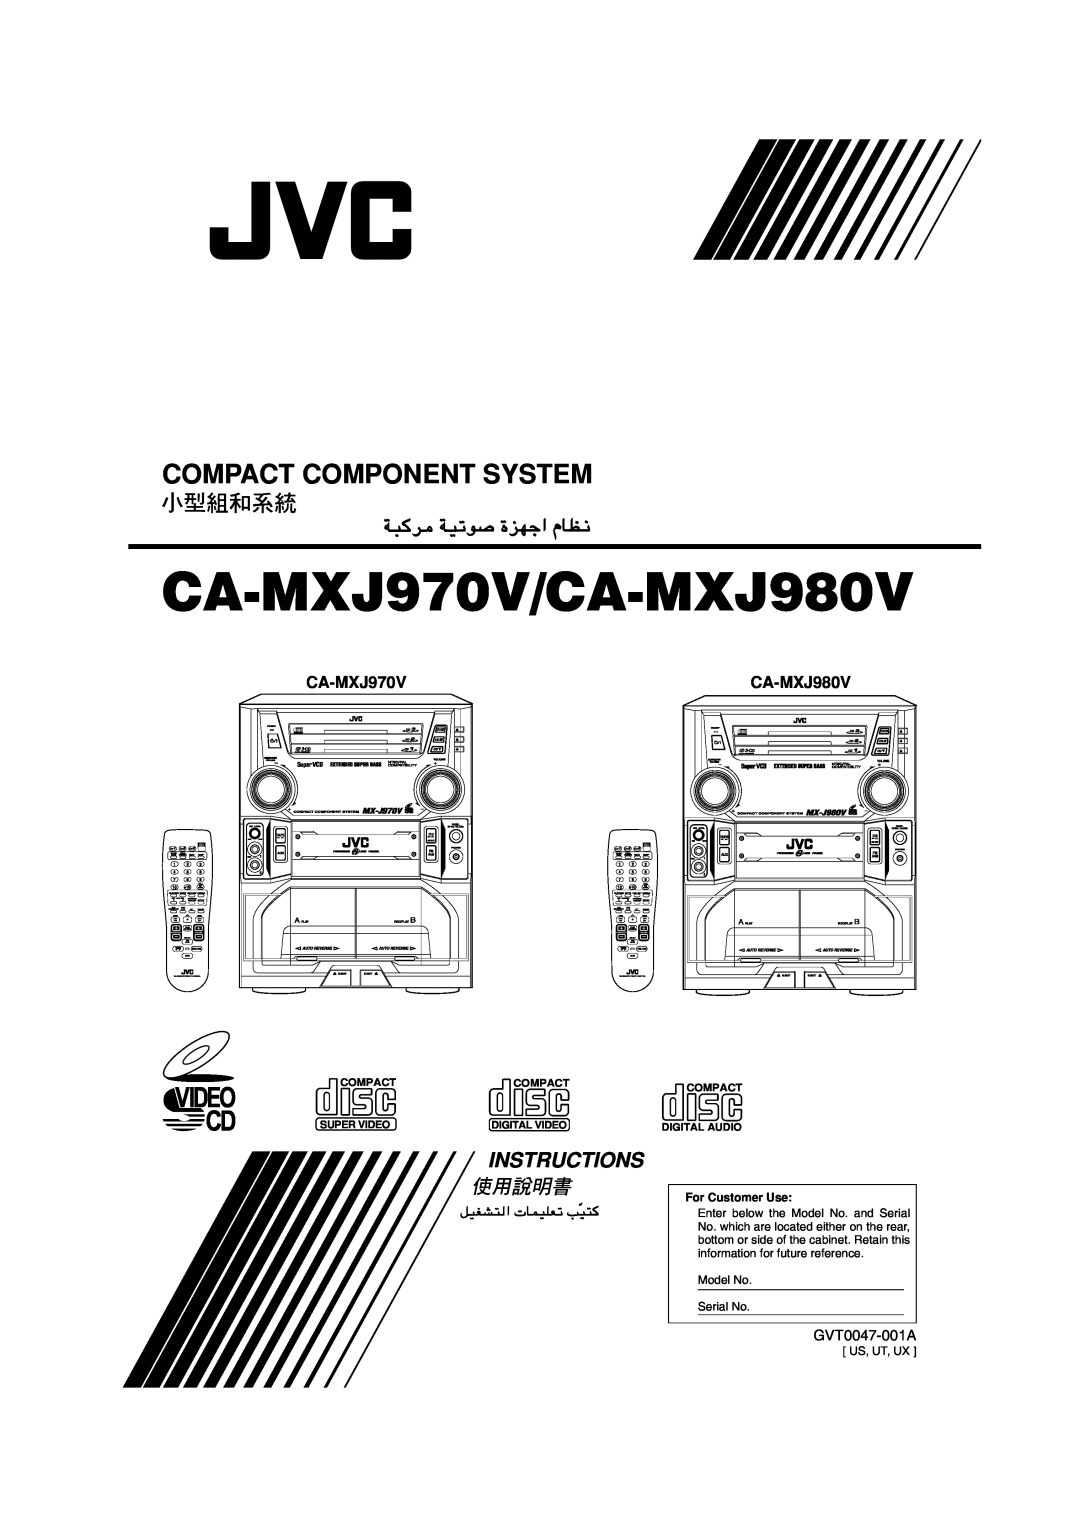 JVC manual GVT0047-001A, CA-MXJ970V/CA-MXJ980V, Compact Component System, Instructions, For Customer Use 